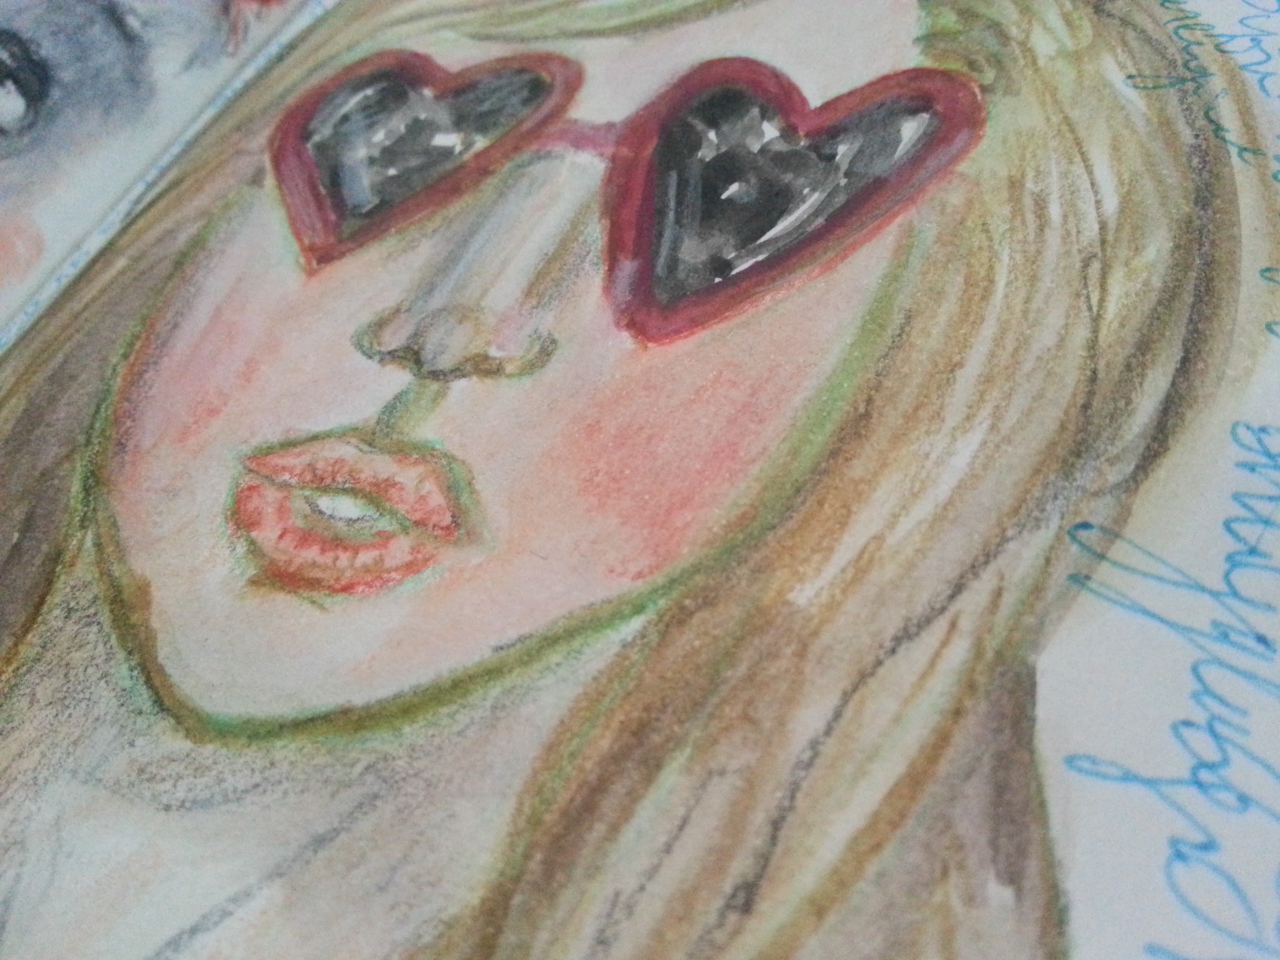 Heart sunglasses watercolor face by Cristina Parus @ creativemag.ro